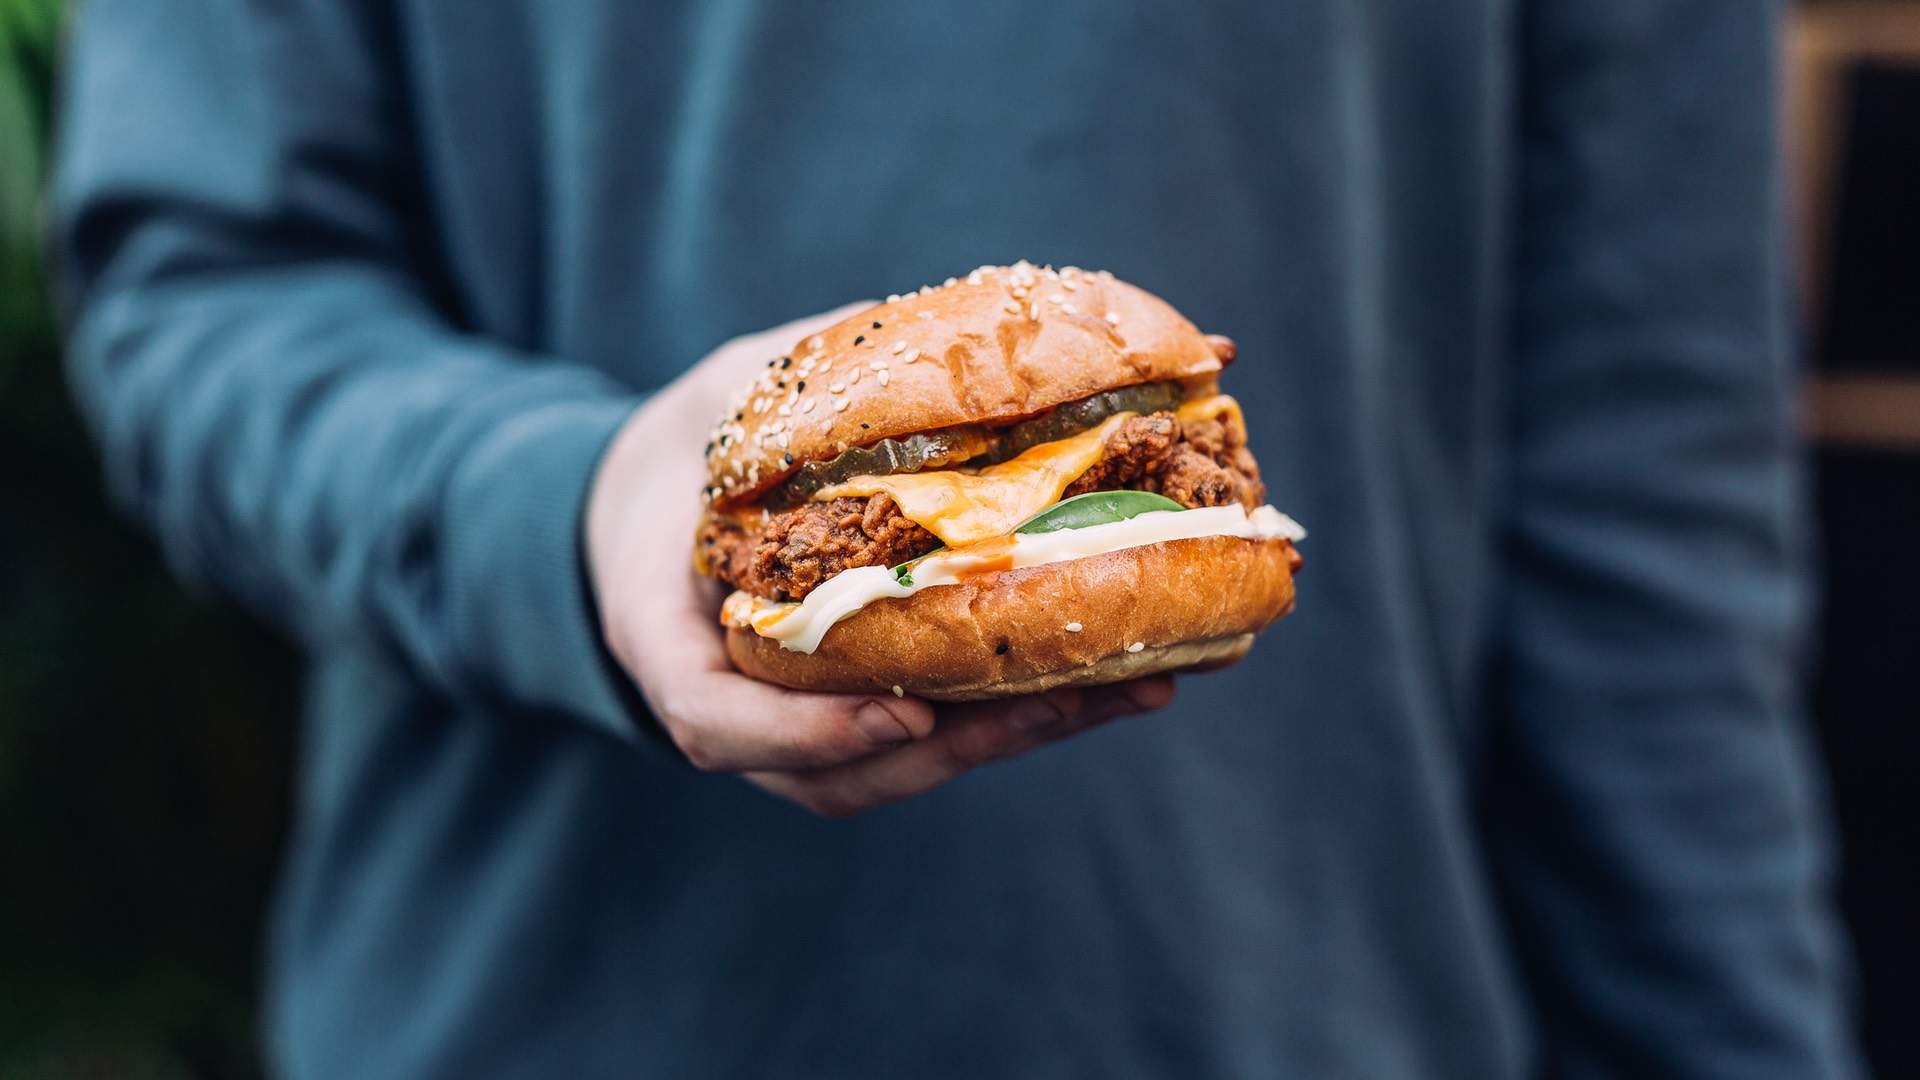 The Best Spots in Brisbane to Get a Next-Level Fried Chicken Burger